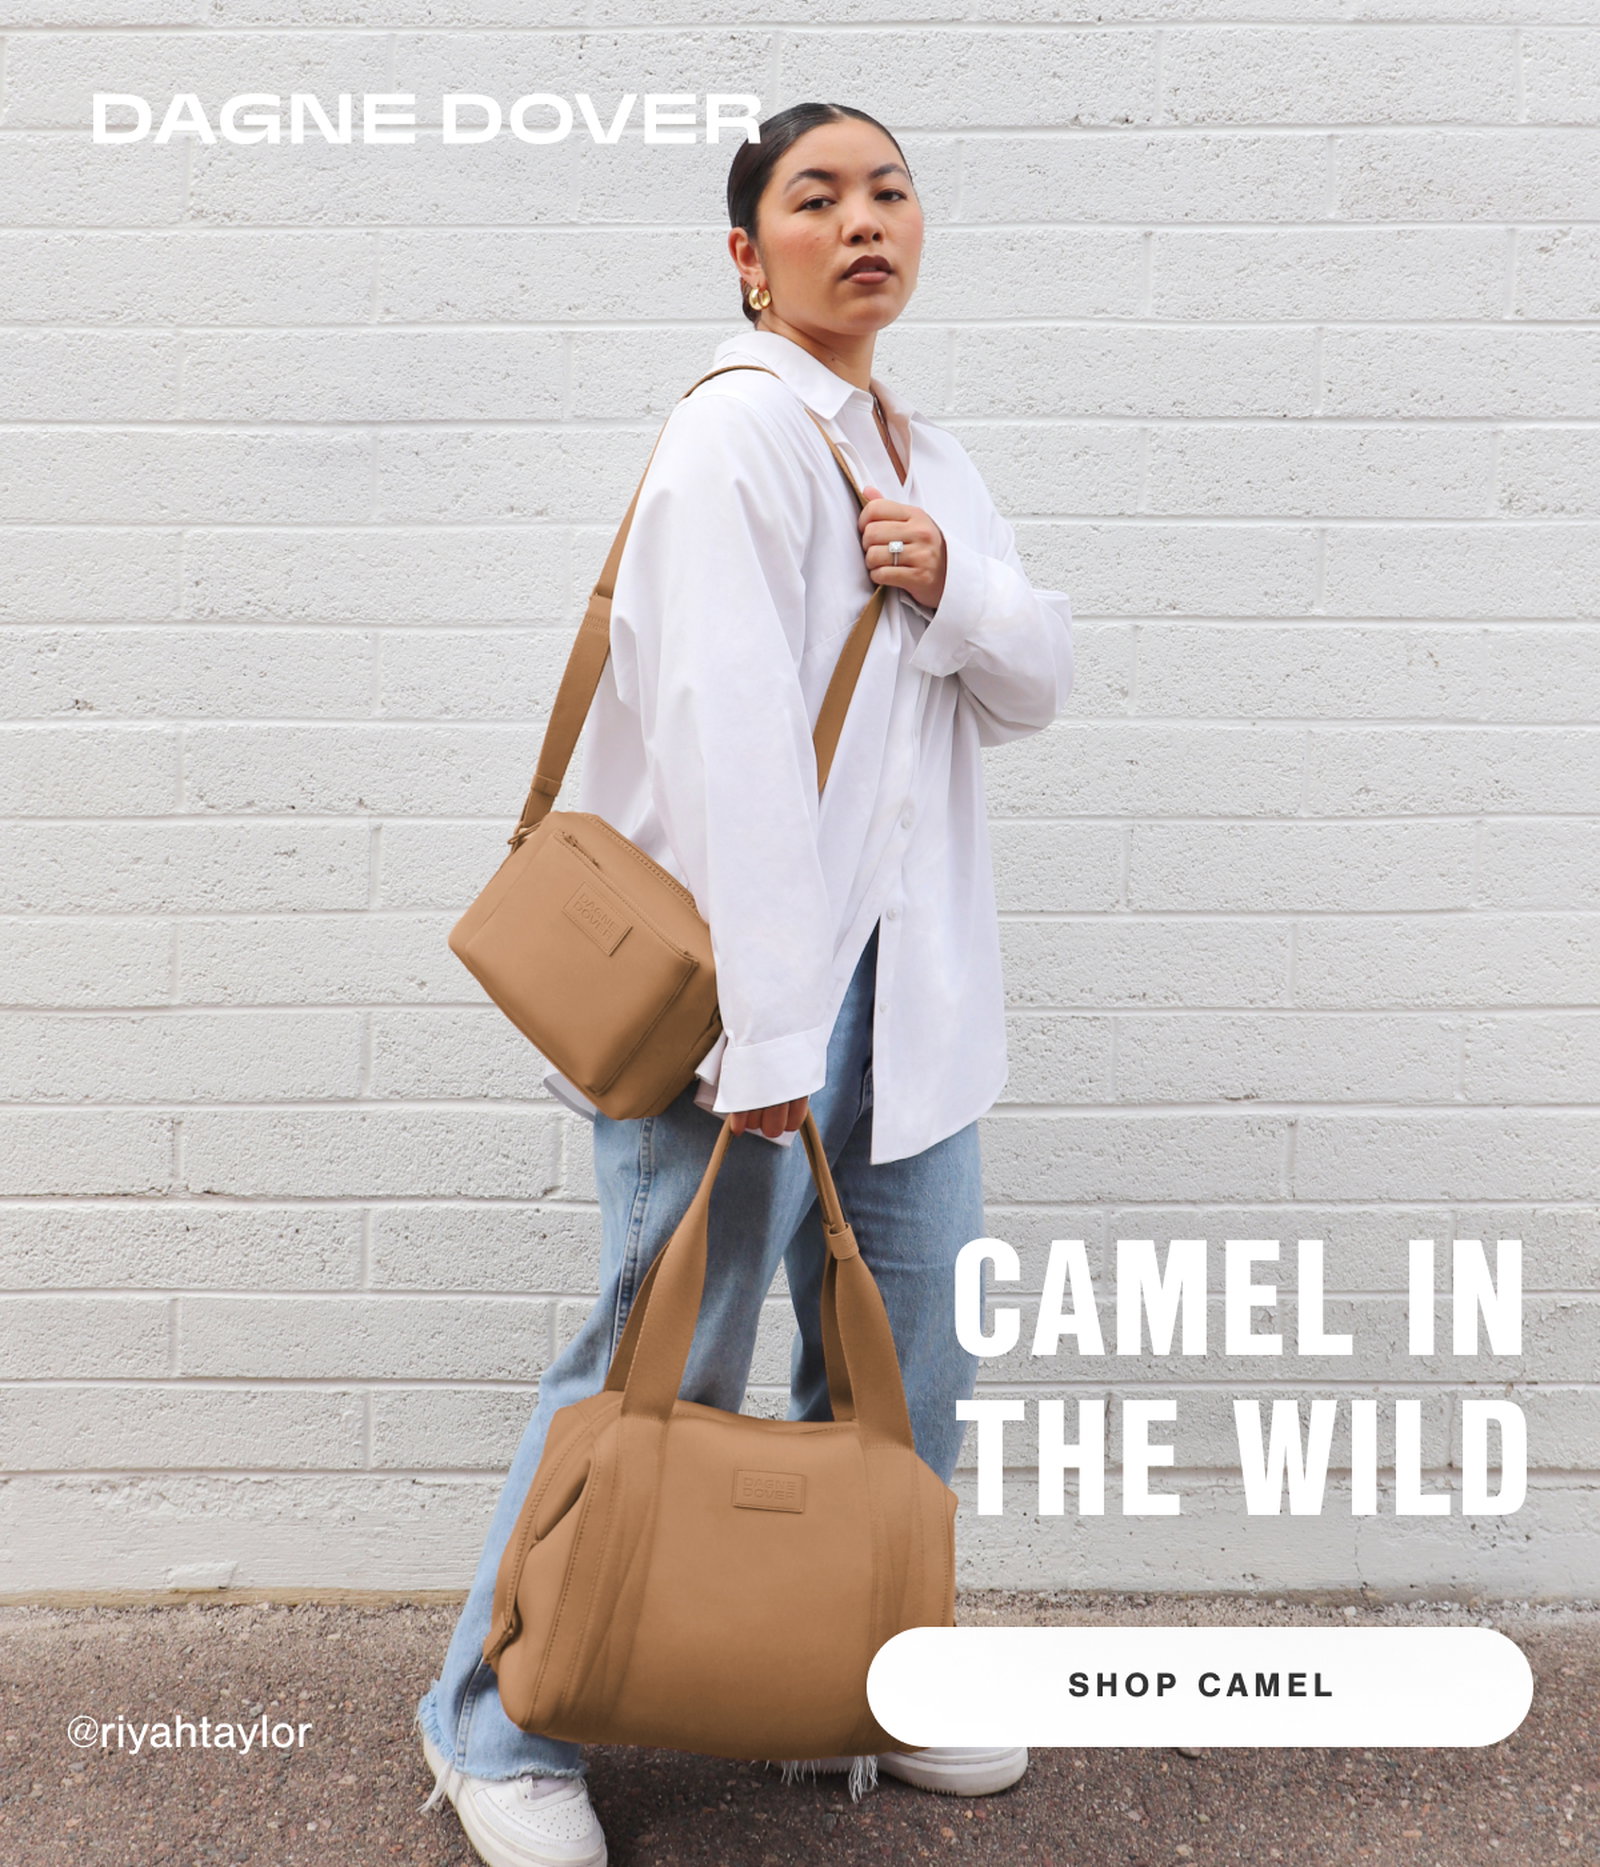 Dagne Dover on Instagram: The Camel Landon is THE bag.